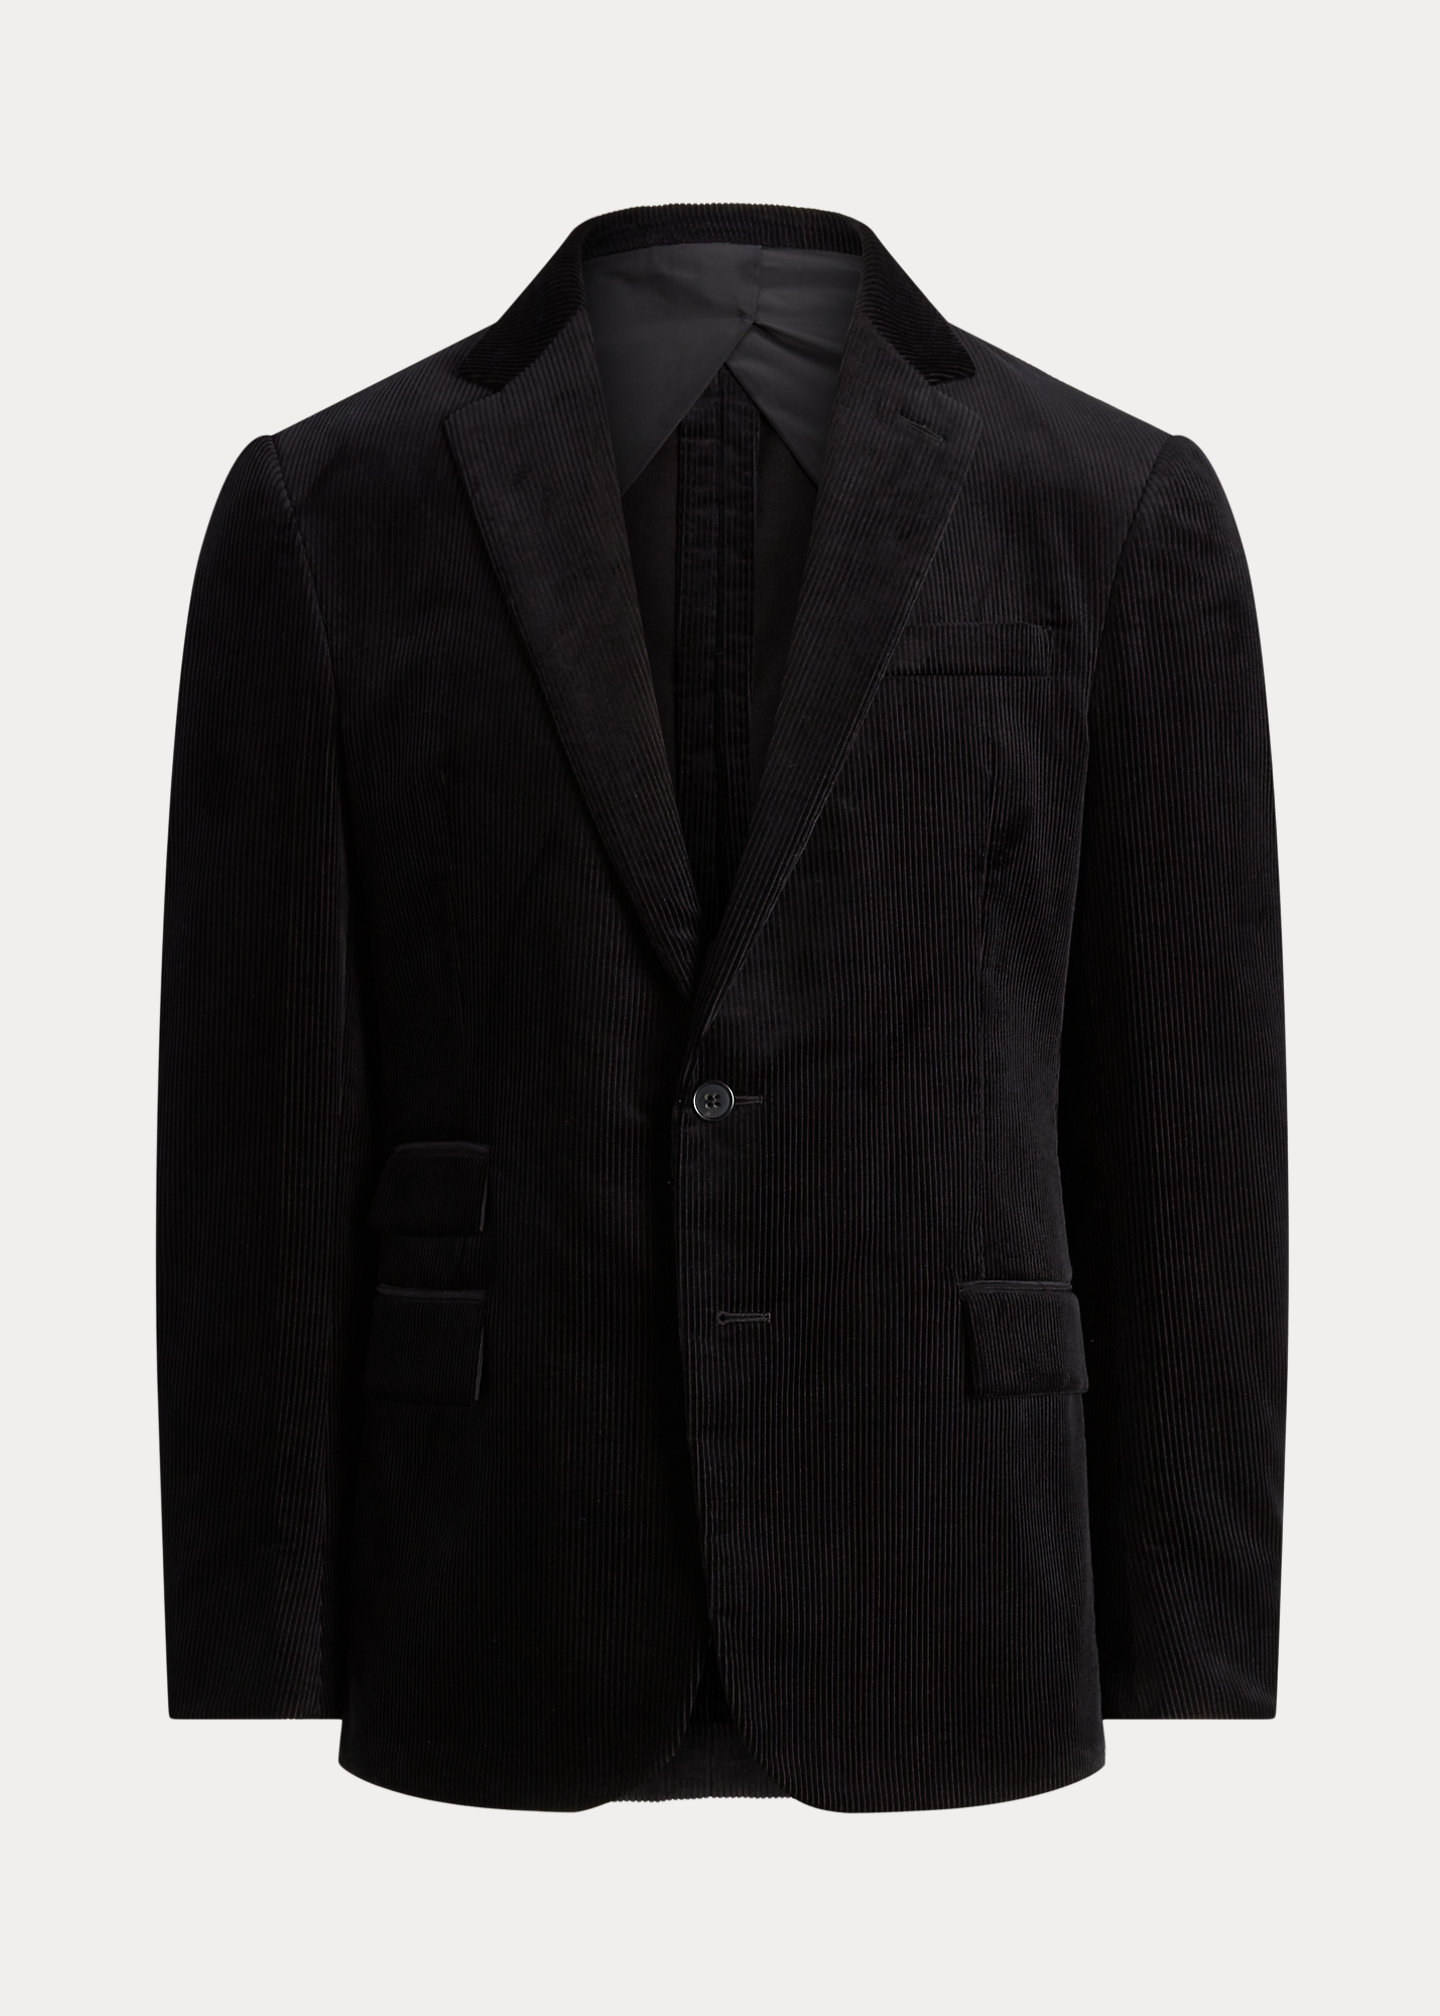 Kent Hand-Tailored Corduroy Suit Jacket